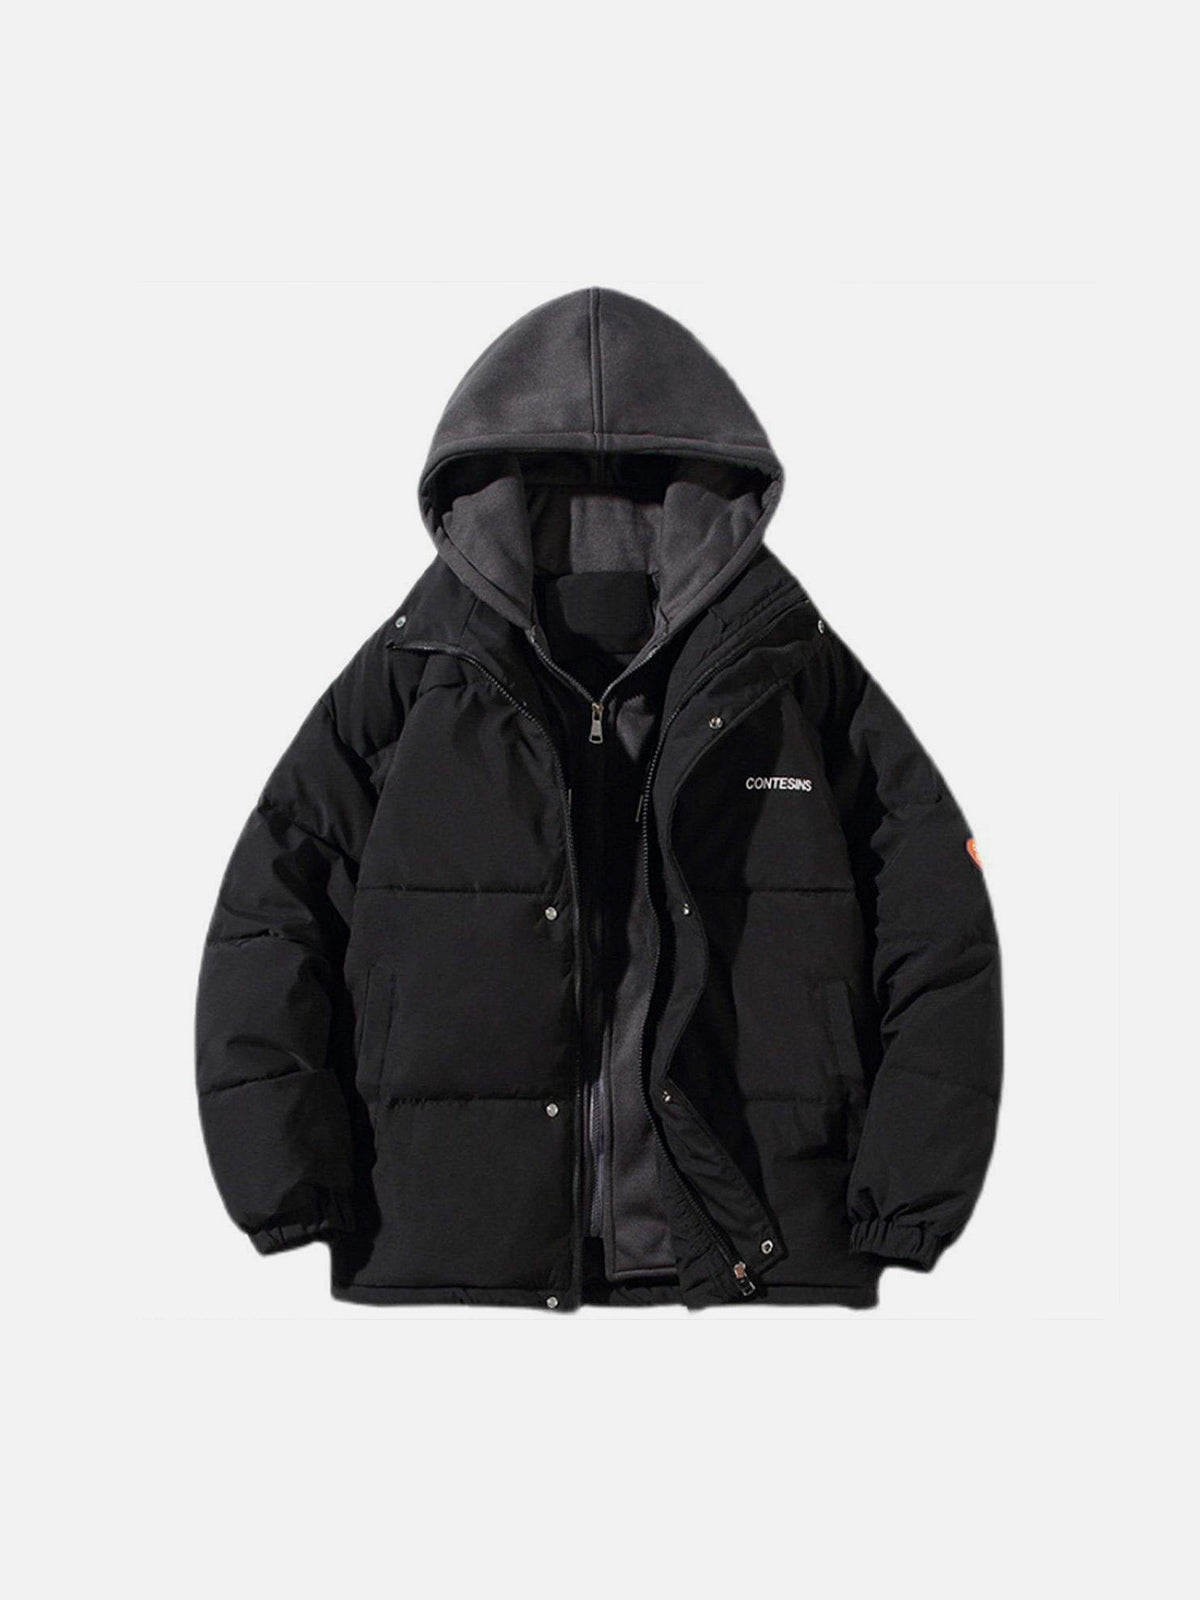 Majesda® - Fake Two-piece Hooded Winter Coat outfit ideas, streetwear fashion - majesda.com